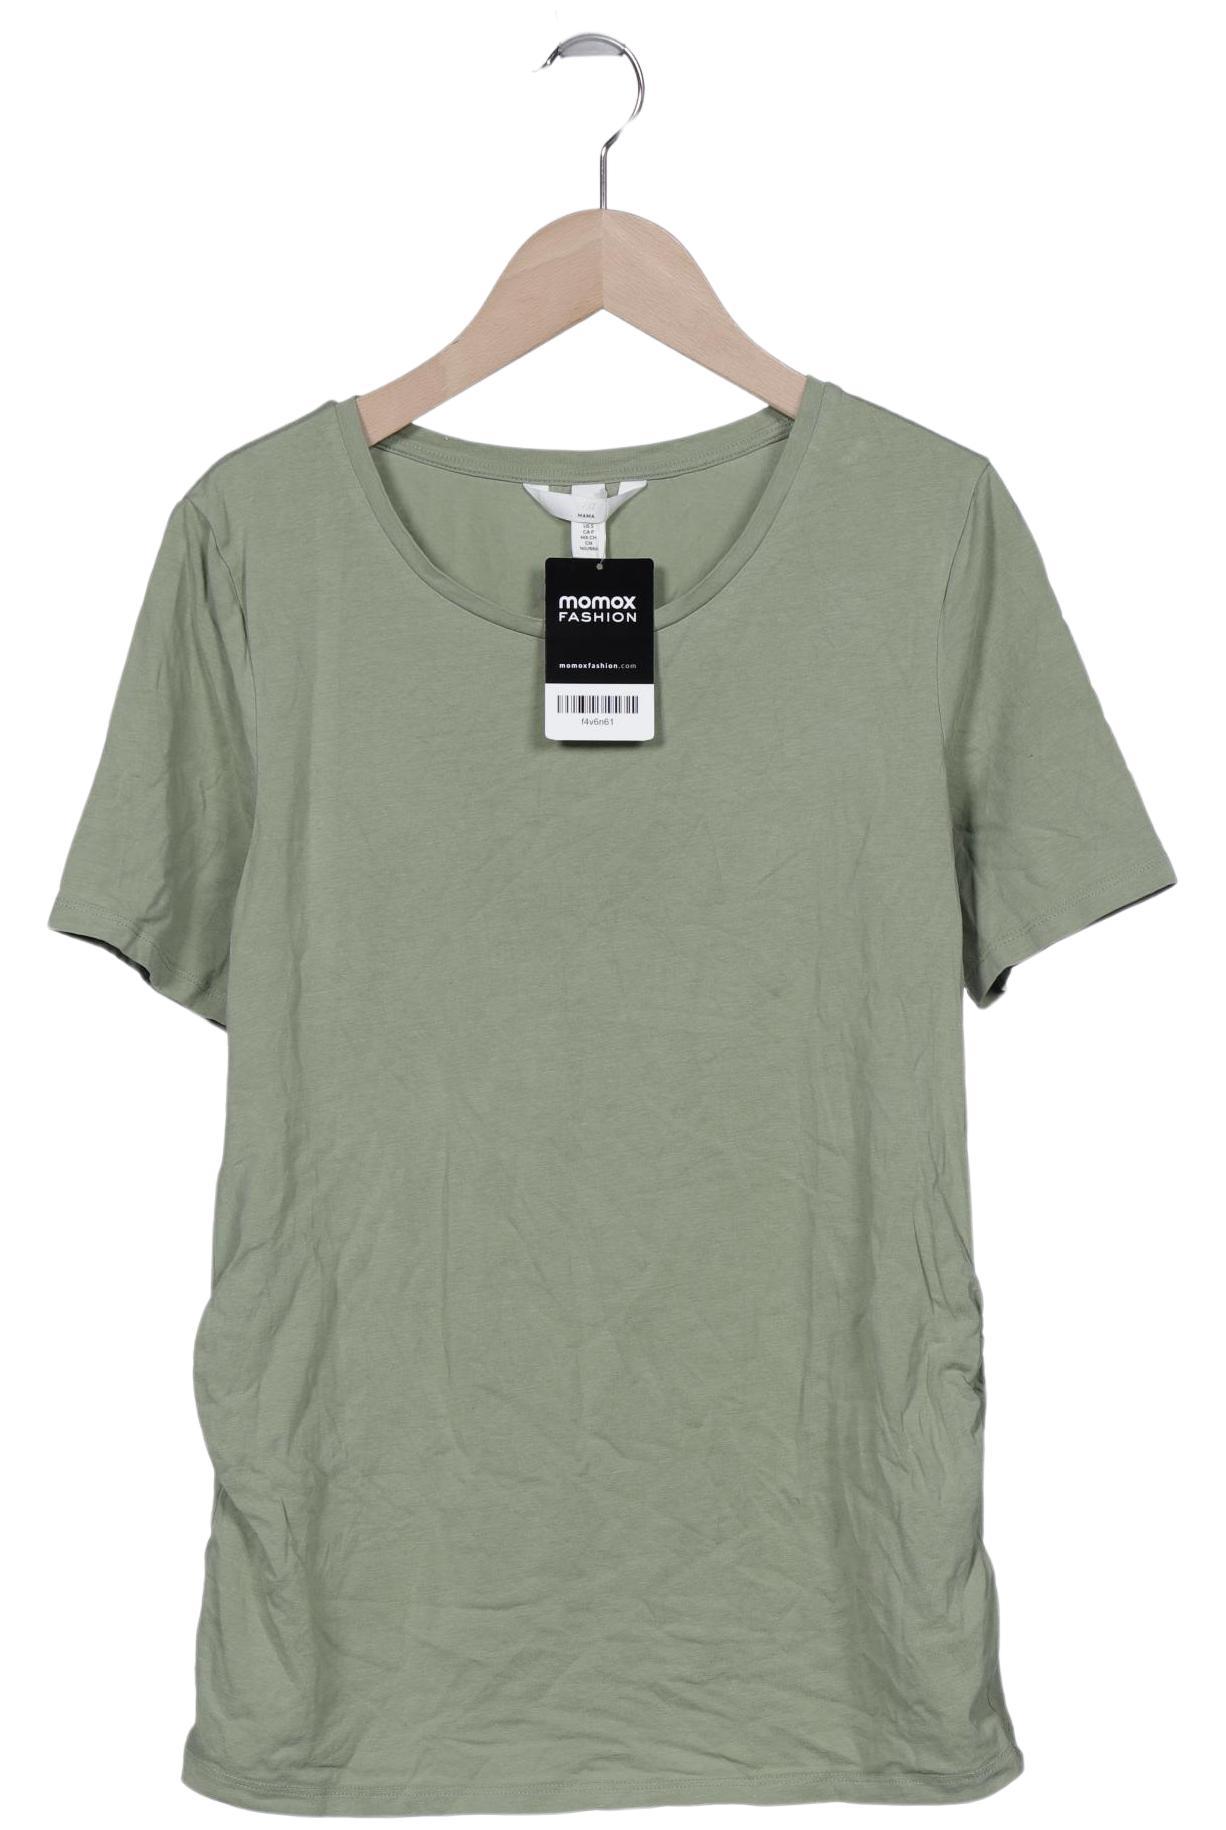 H&M Mama Damen T-Shirt, grün, Gr. 36 von H&M Mama